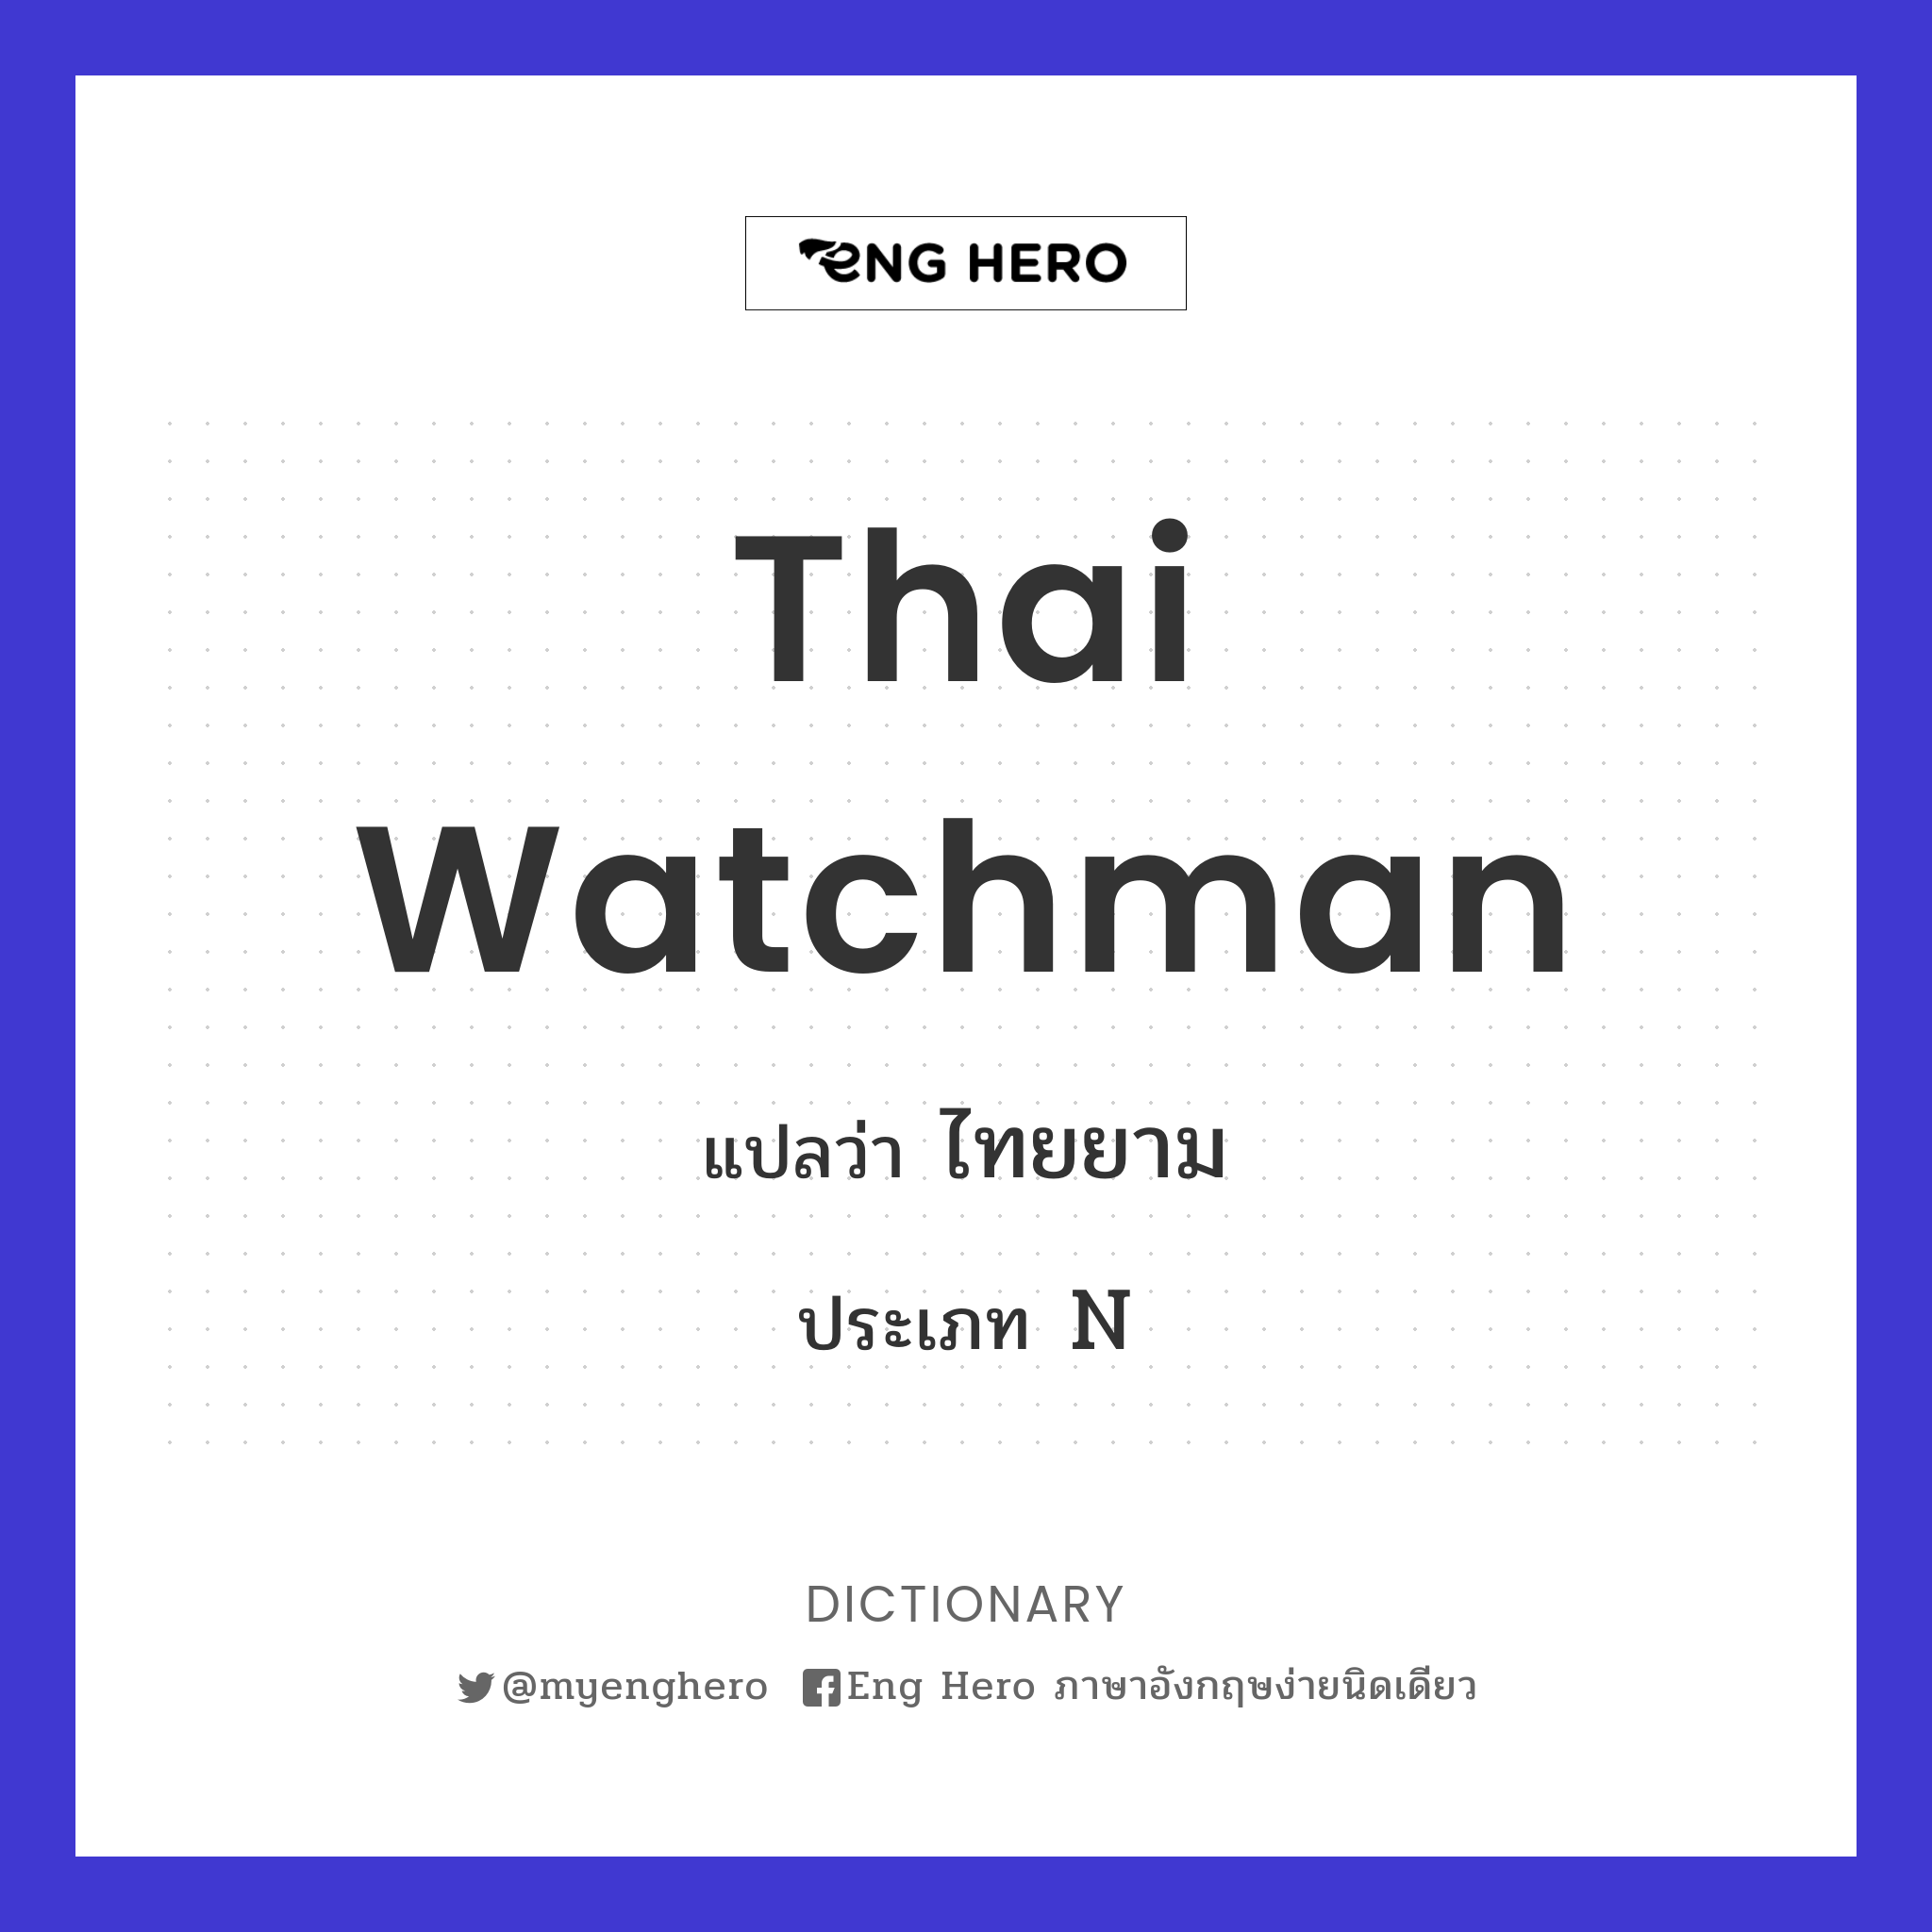 Thai watchman